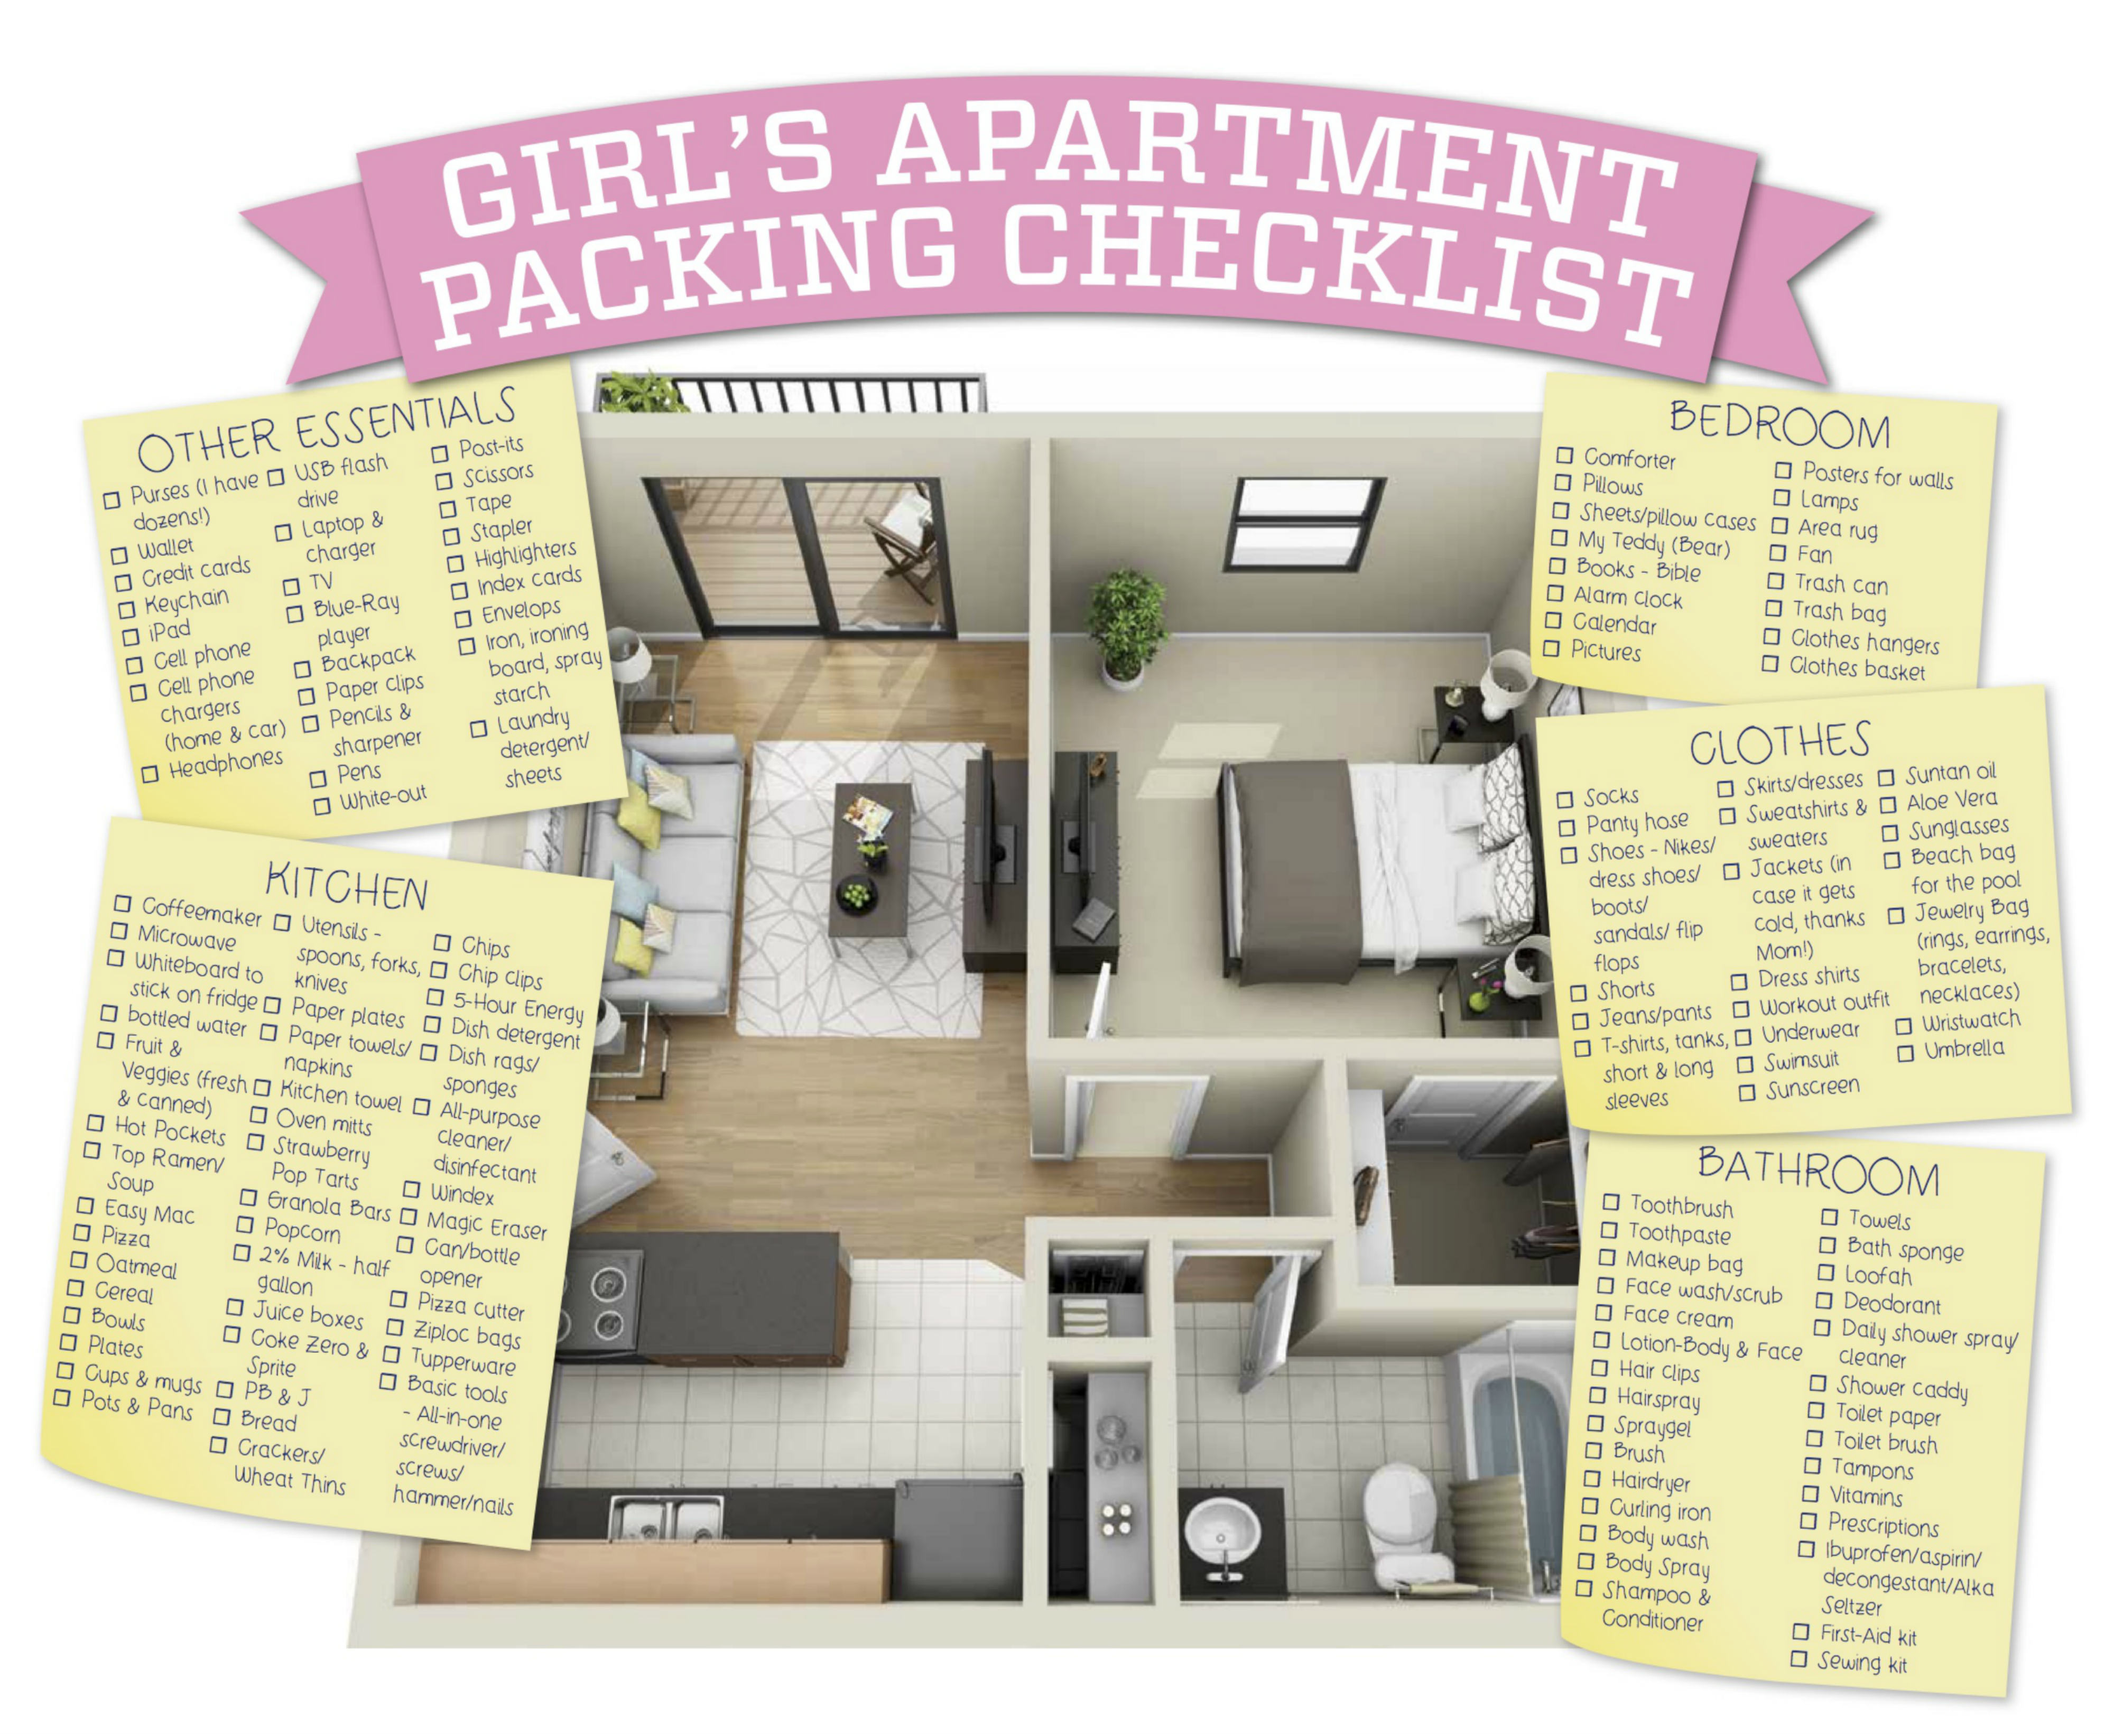 https://www.collegerentals.com/apartment-news/wp-content/uploads/2015/09/CR-GIRLS_Apartment_Checklist-JD-3-51.jpg